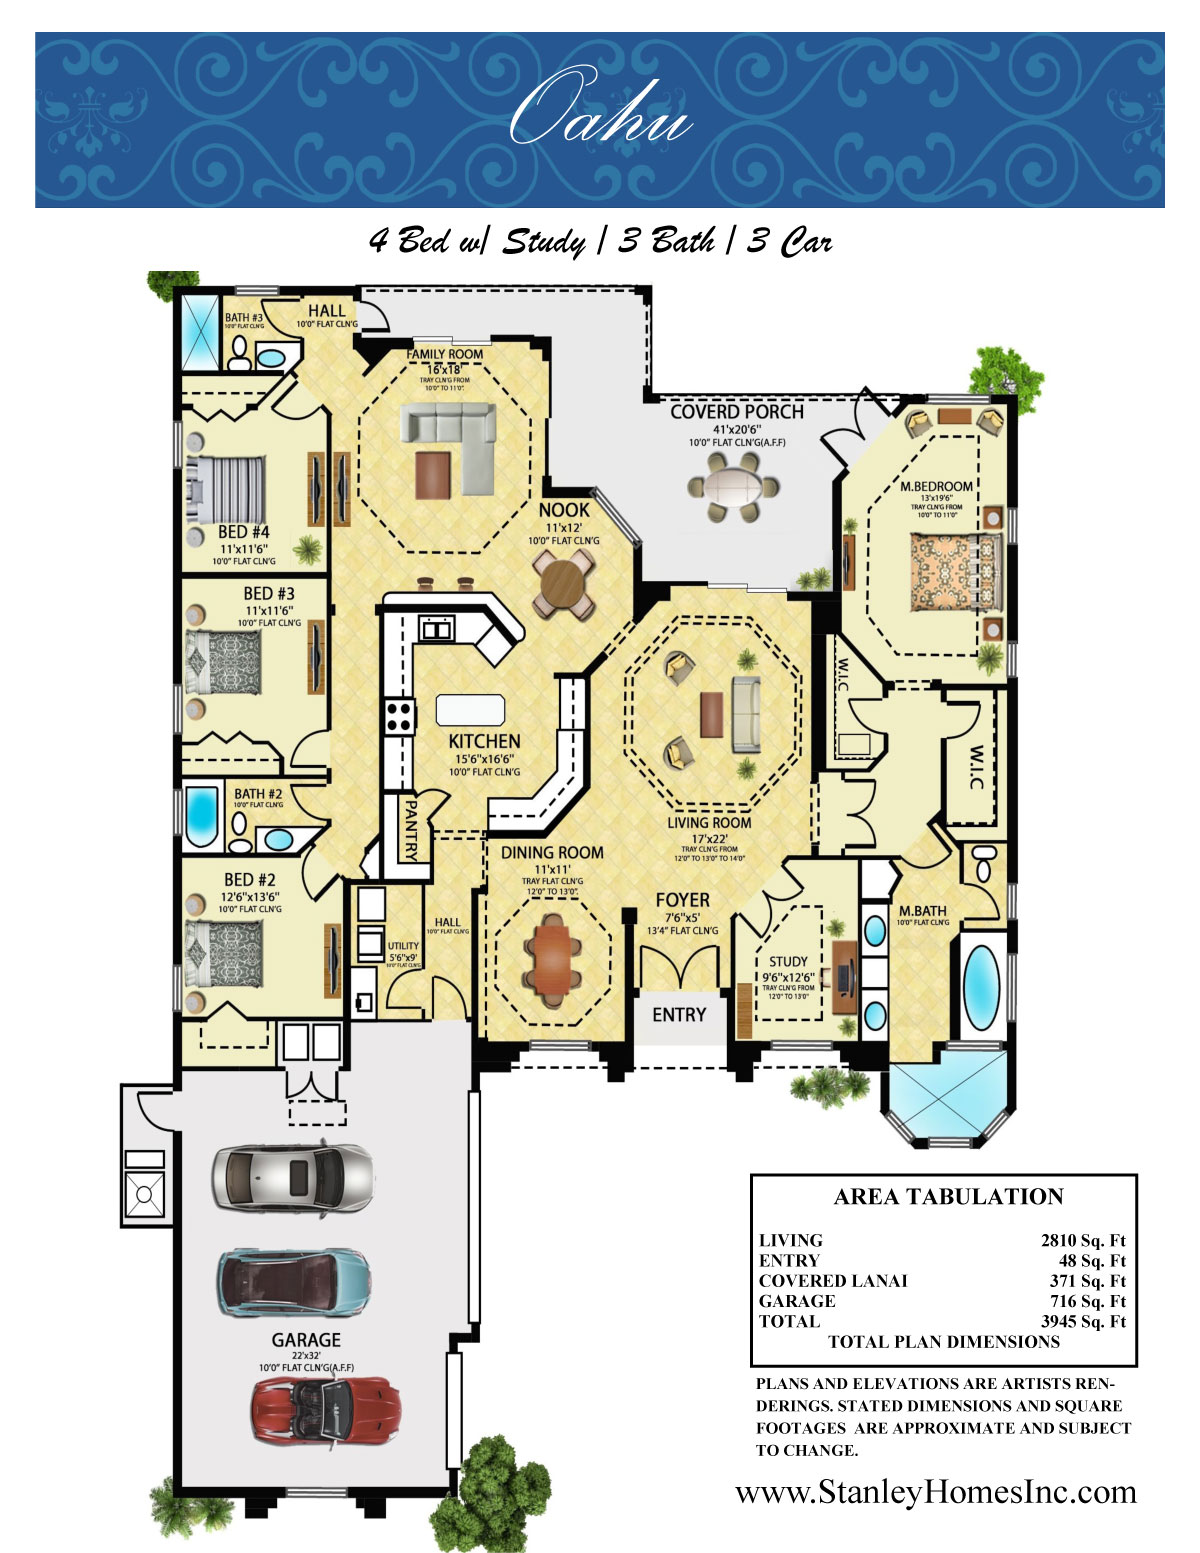 Oahu Floor Plan Custom Home from Stanley Homes Melbourne FL